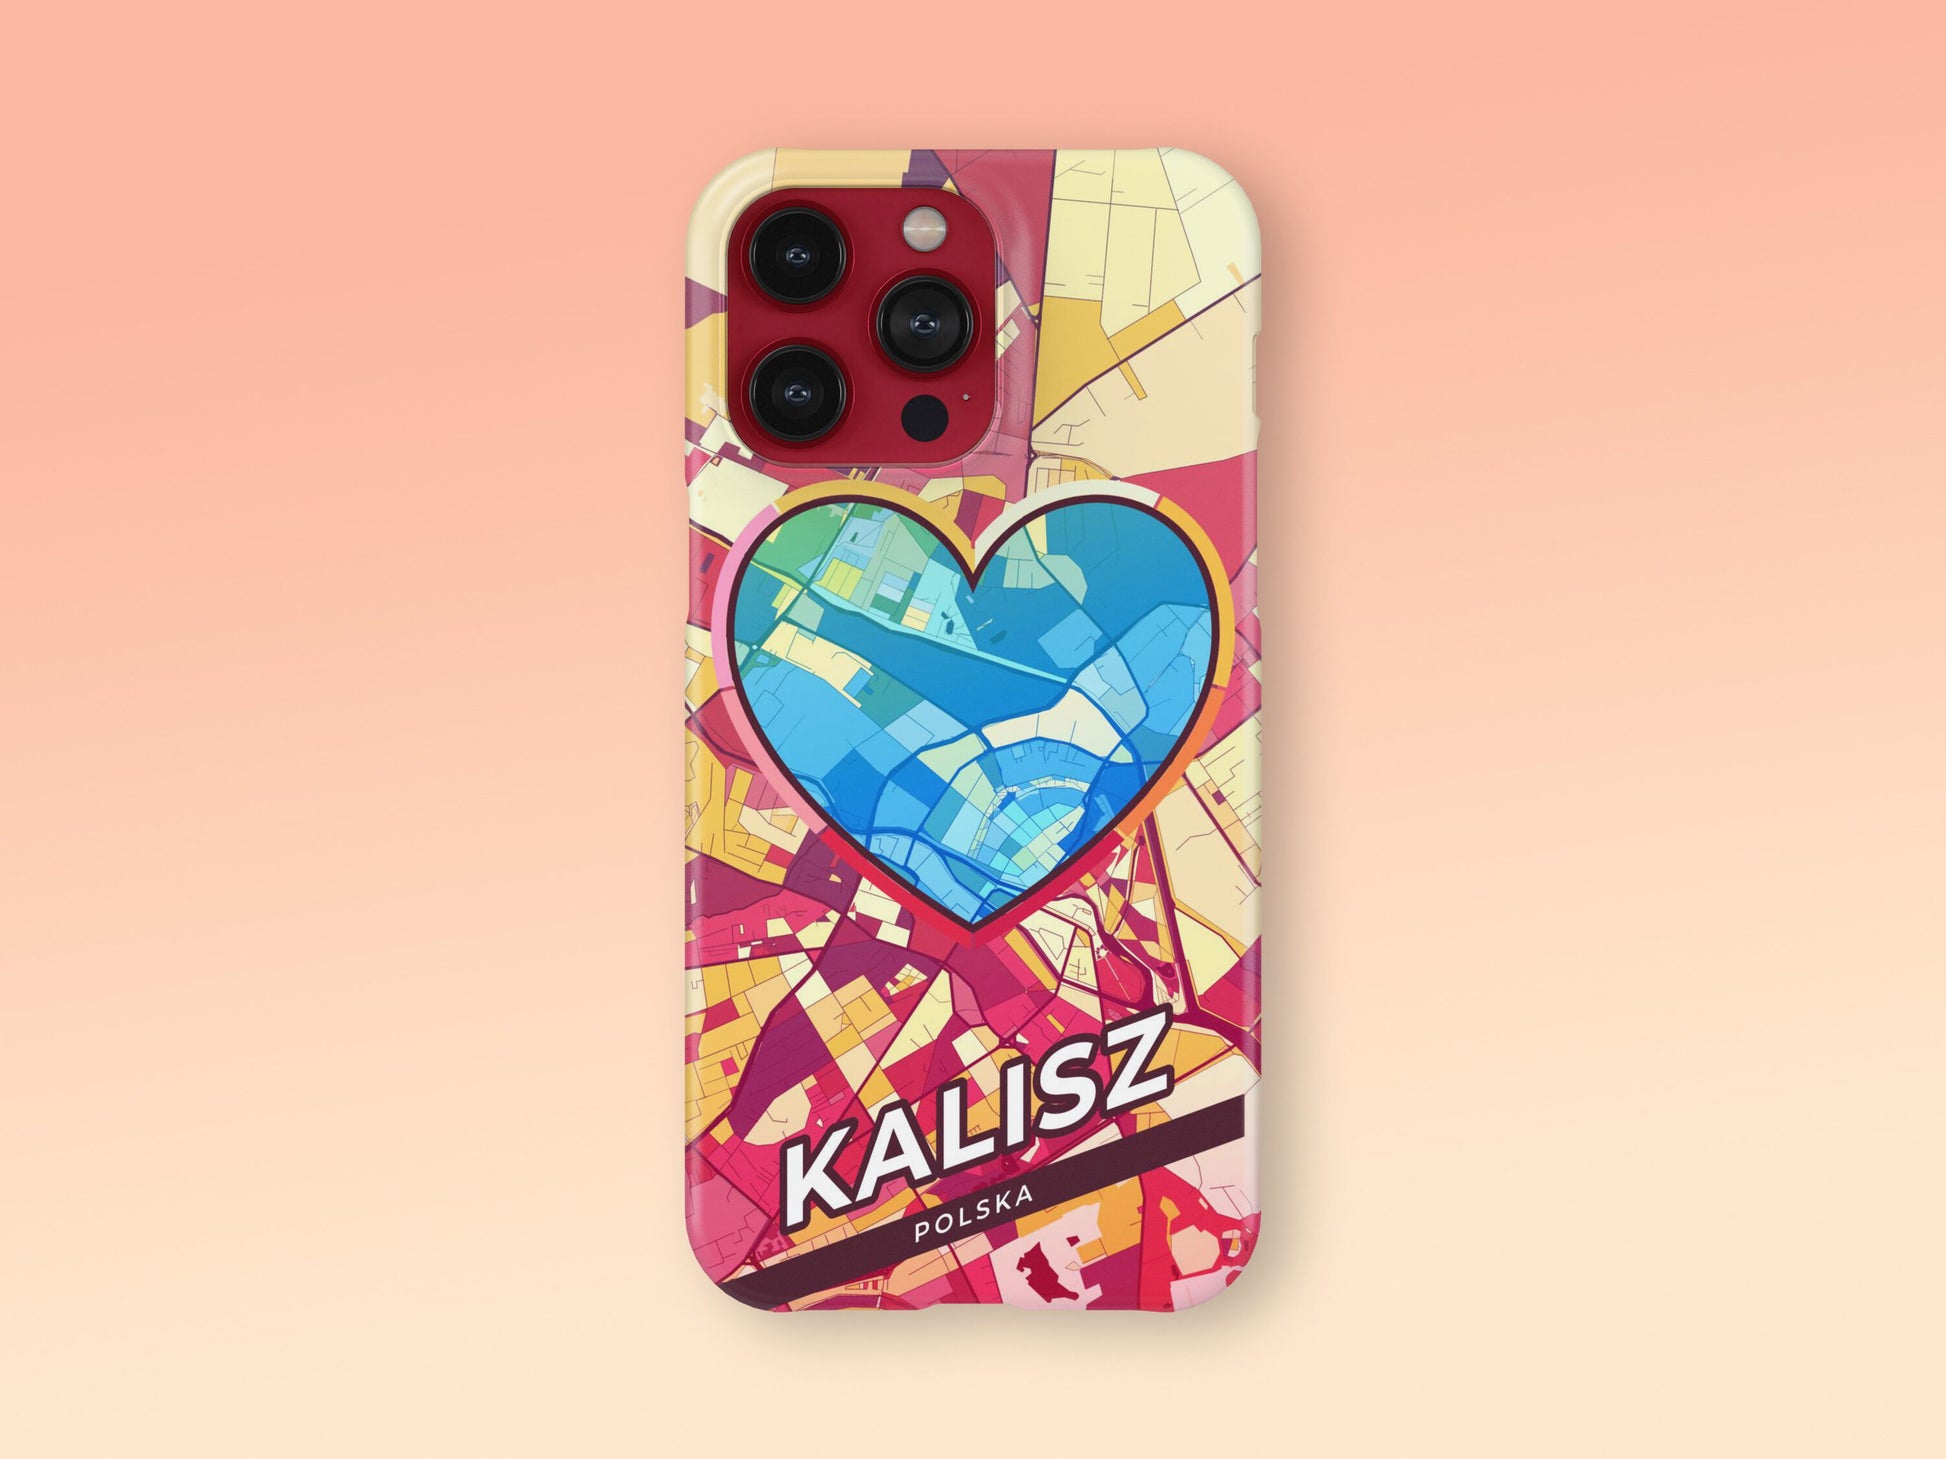 Kalisz Poland slim phone case with colorful icon. Birthday, wedding or housewarming gift. Couple match cases. 2